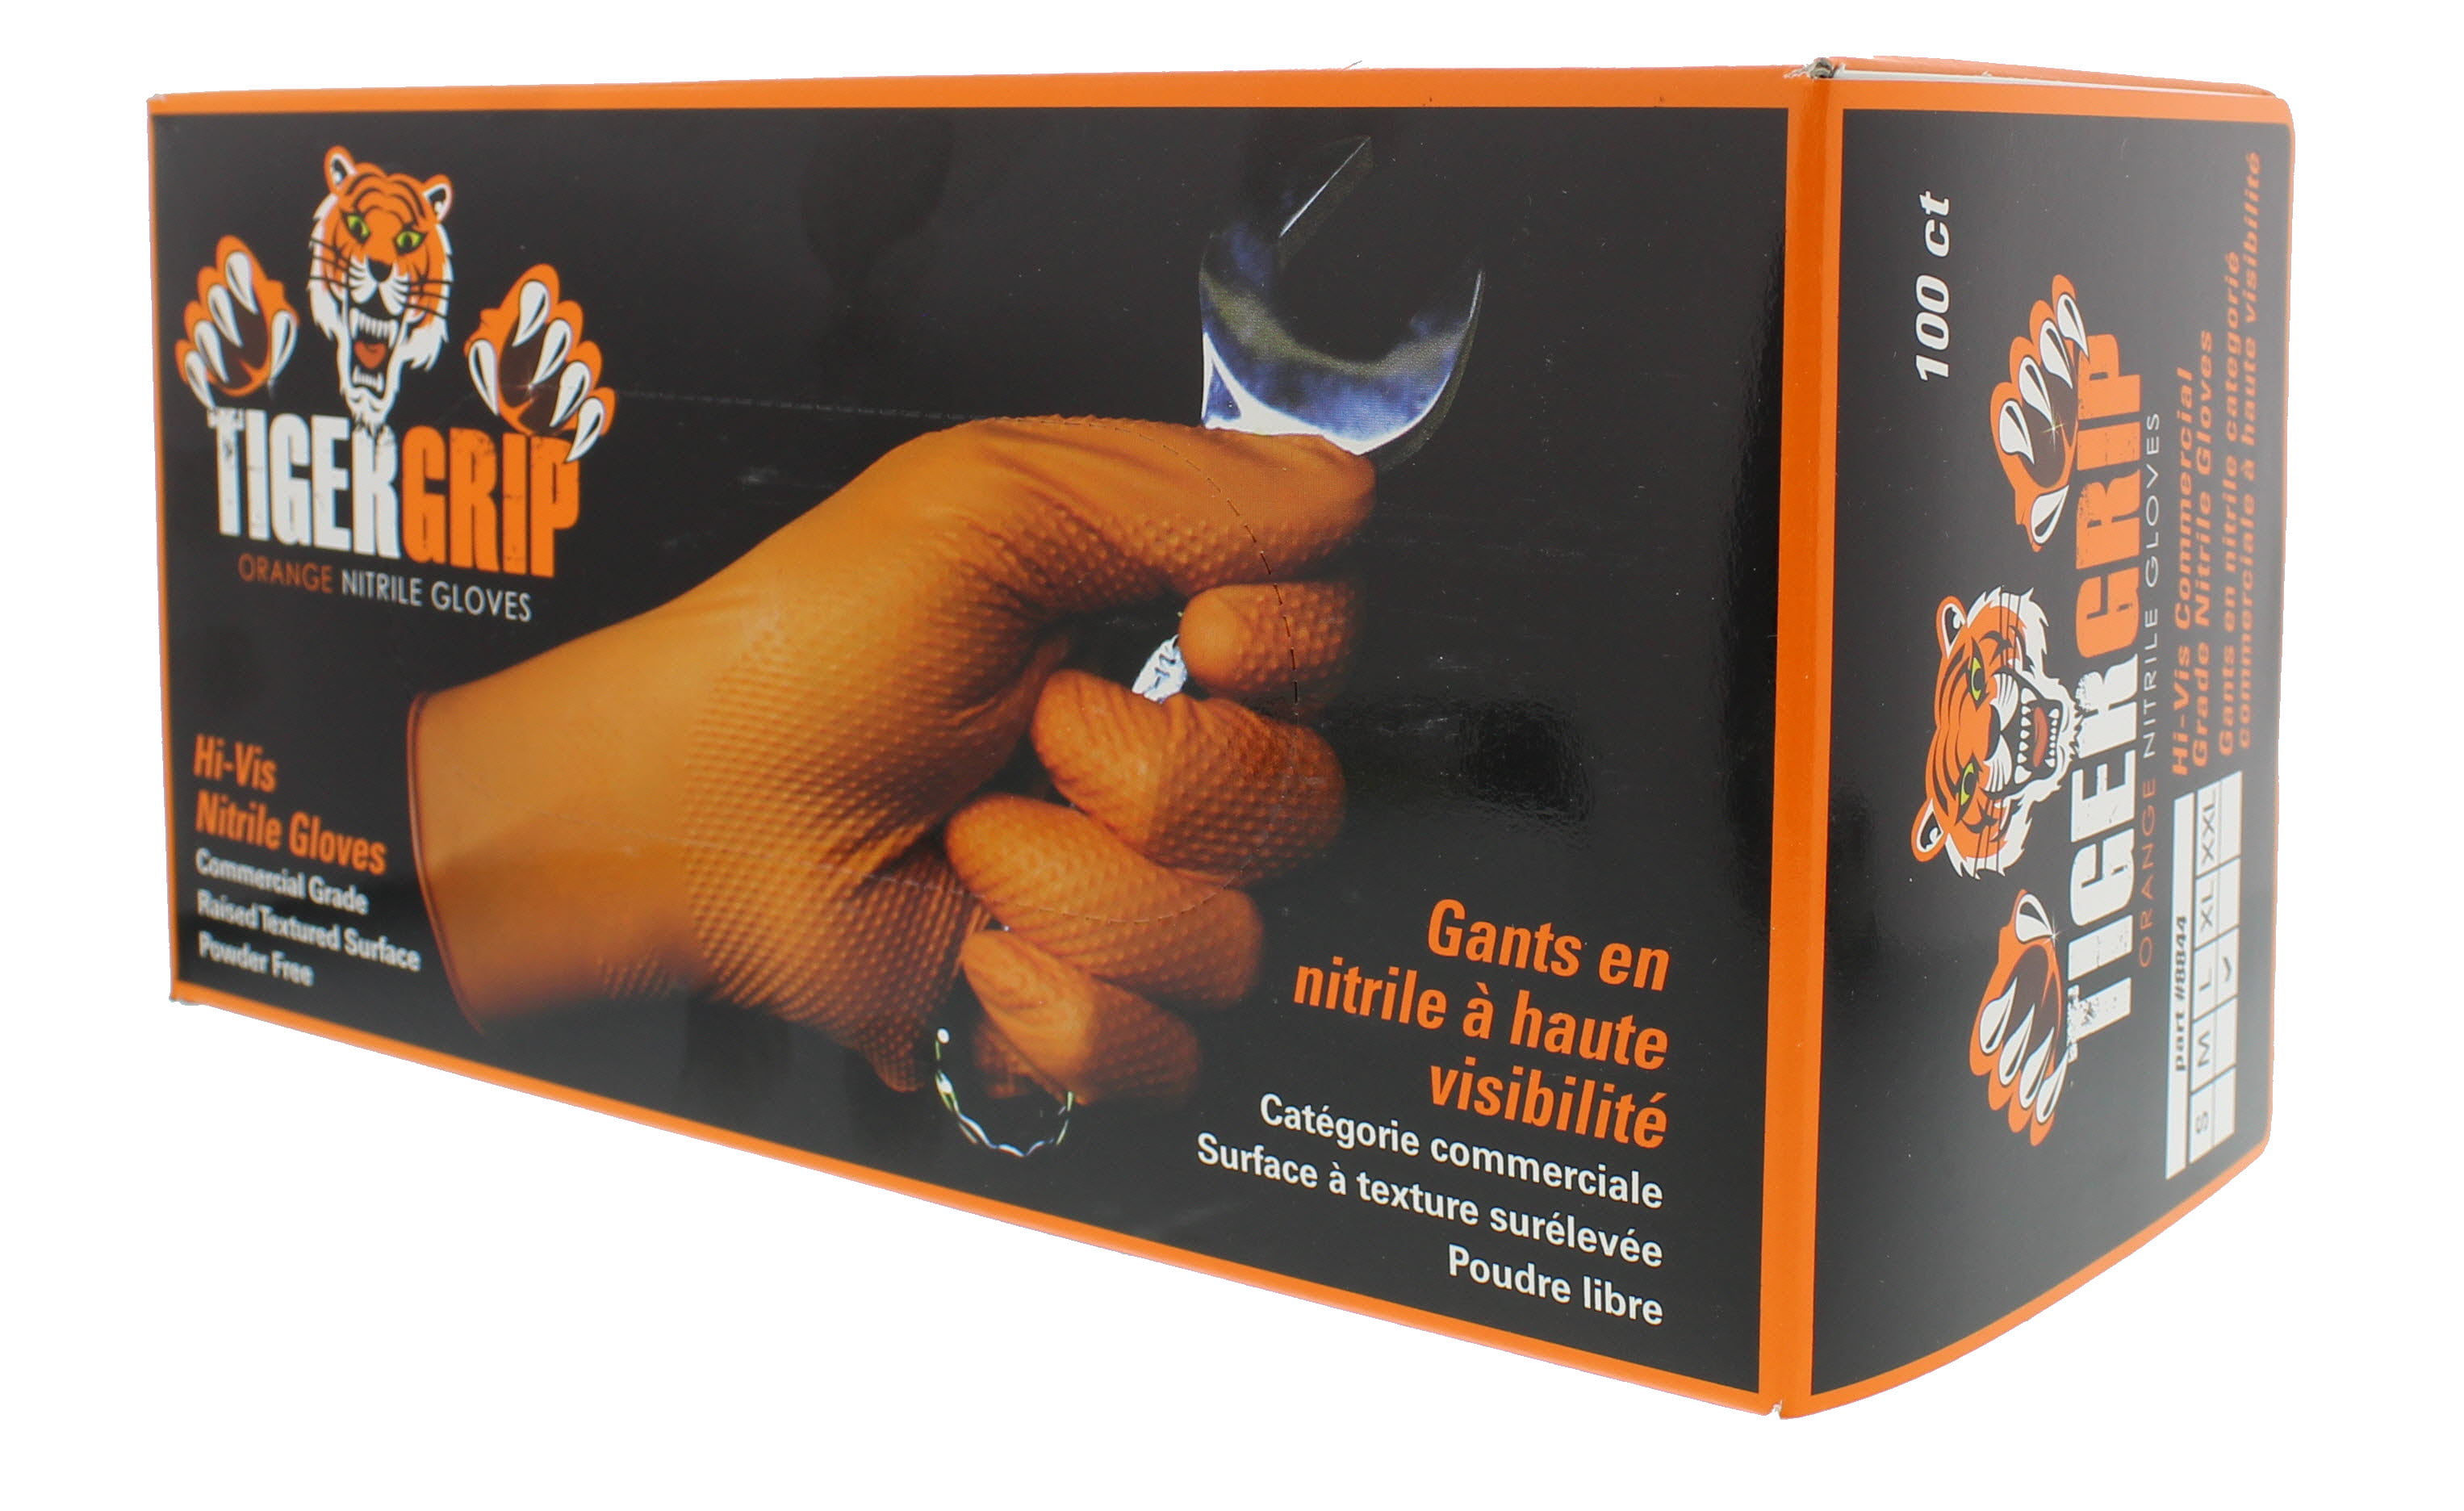 LARGE Genuine Tiger Grip Strong Orange Nitrile Gloves Hi-visibility Powder Free 